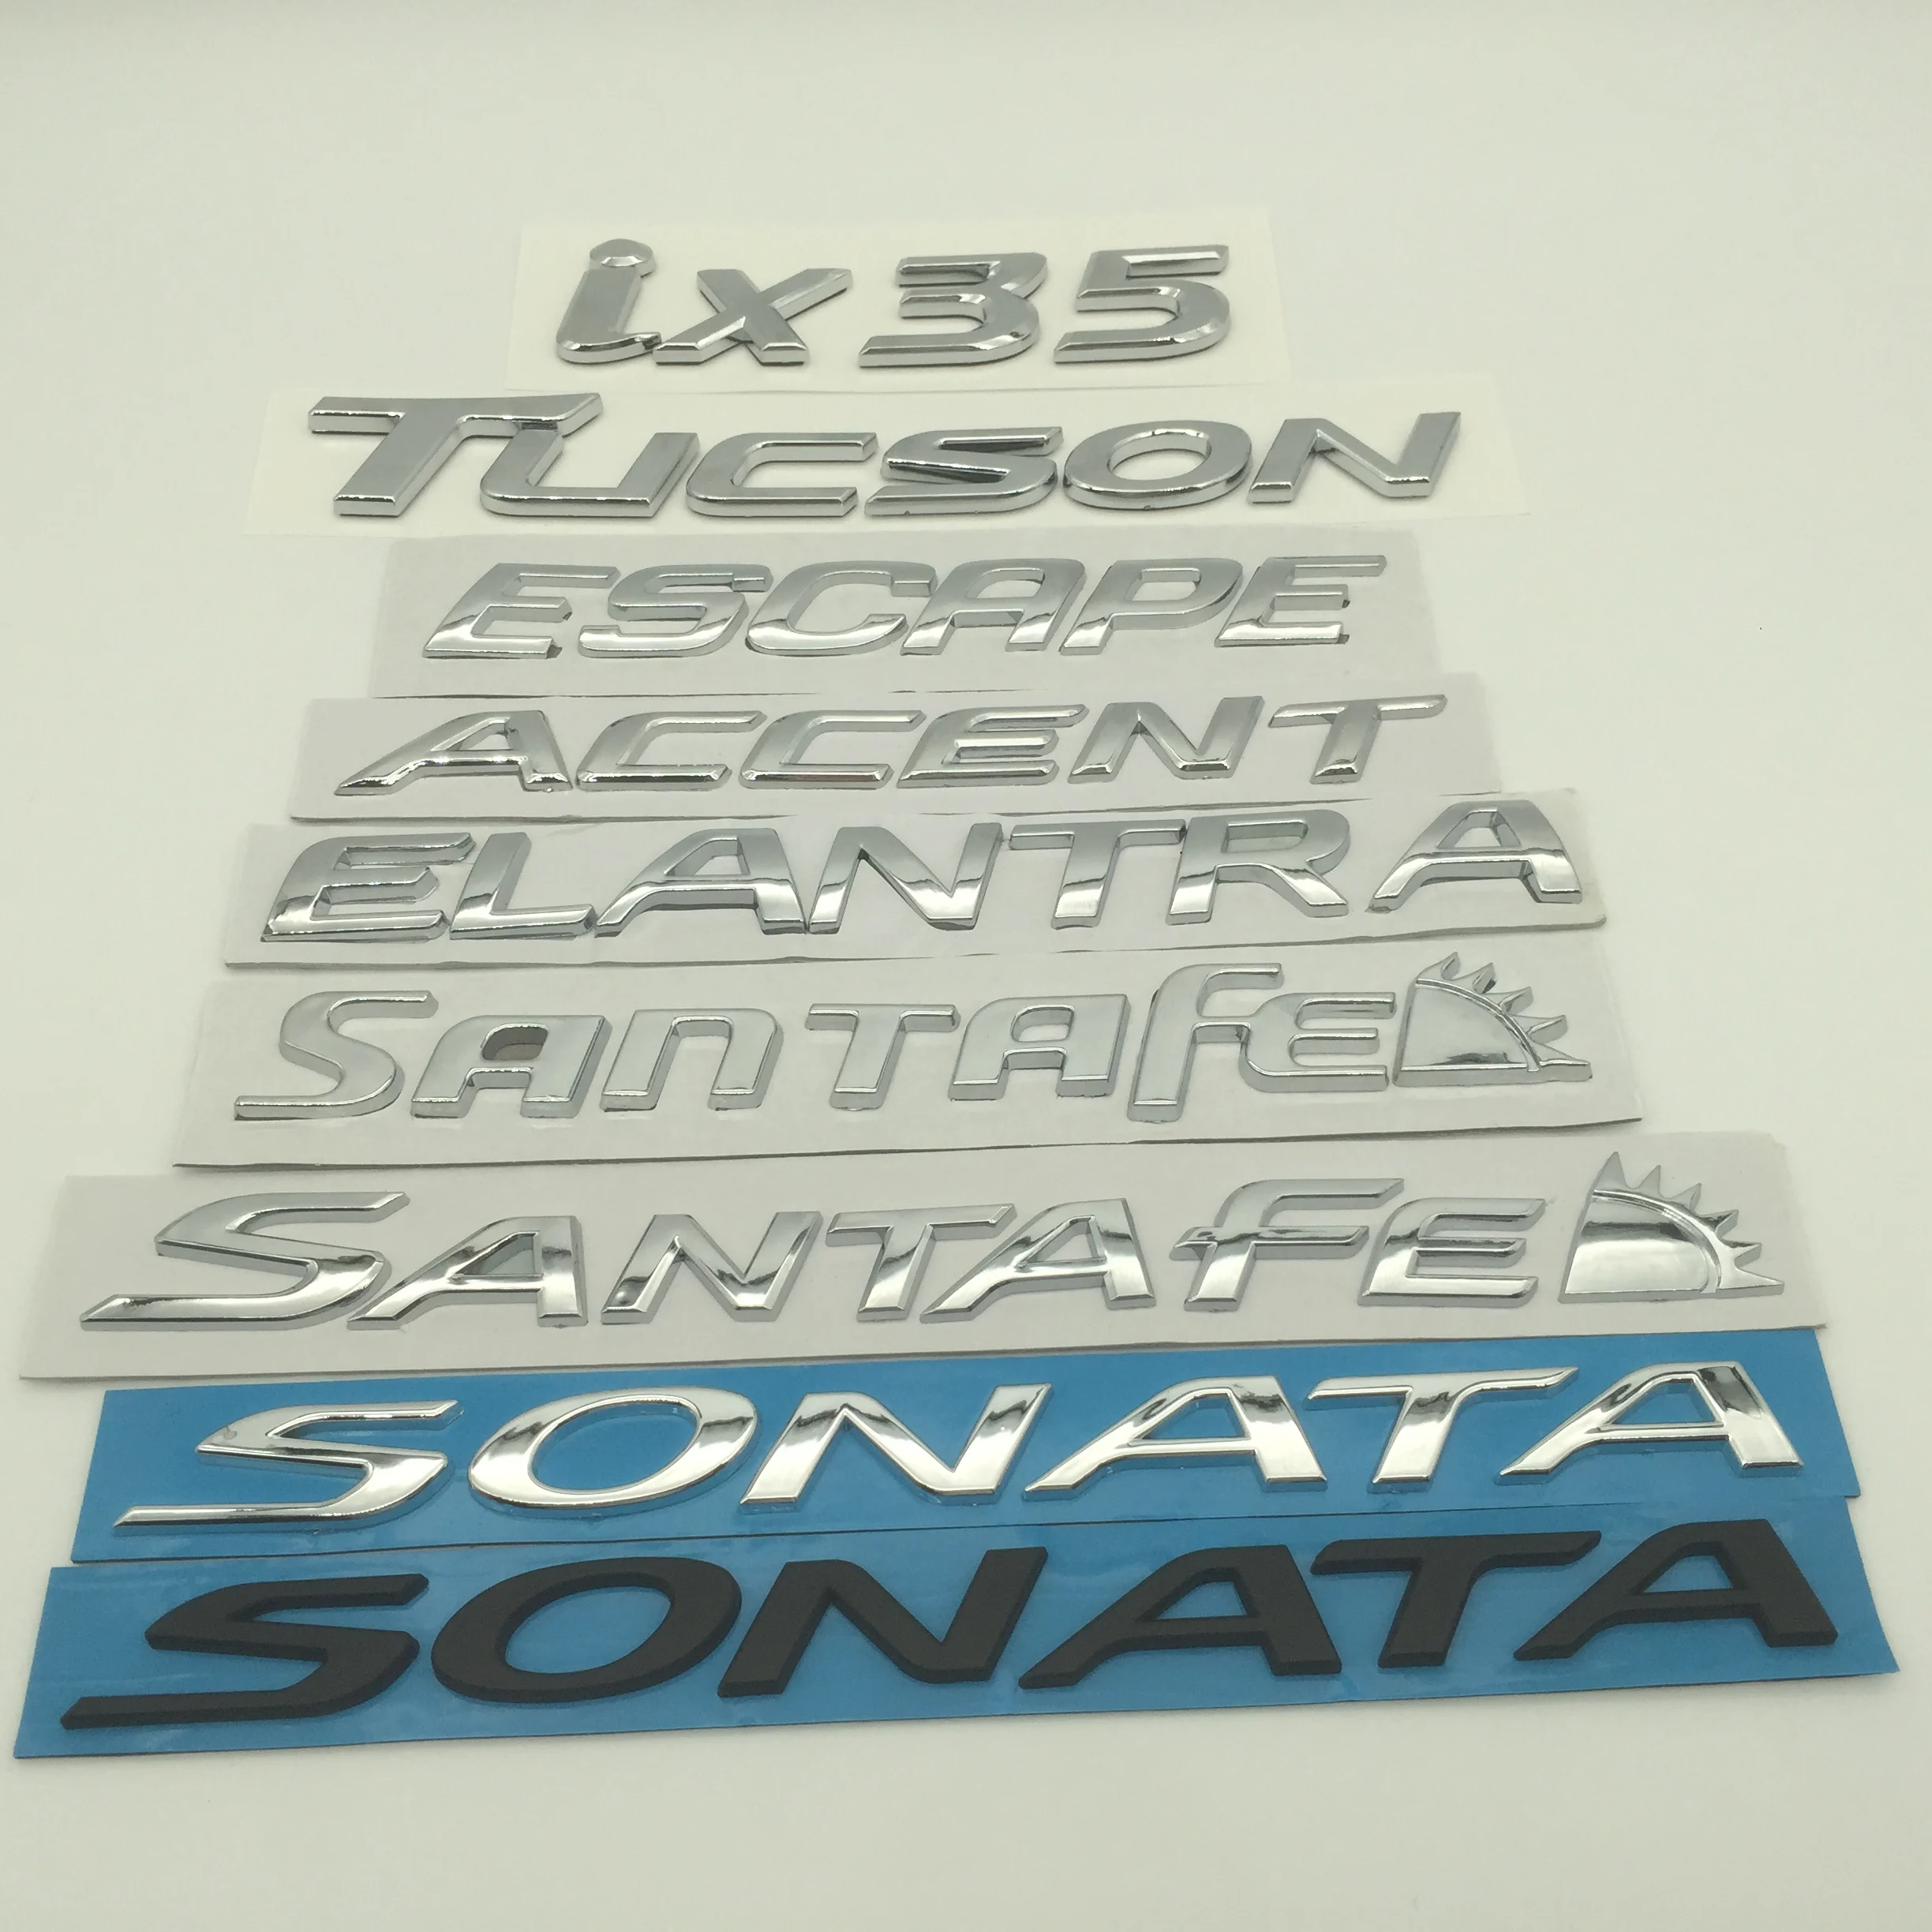 

1pcs for SANTAFE ACCENT ELANTRA ESCRPE SONATA Tucson IX35 Car Letter Rear Tail Trunk Decals Emblem Badge Sticker Decal Styling